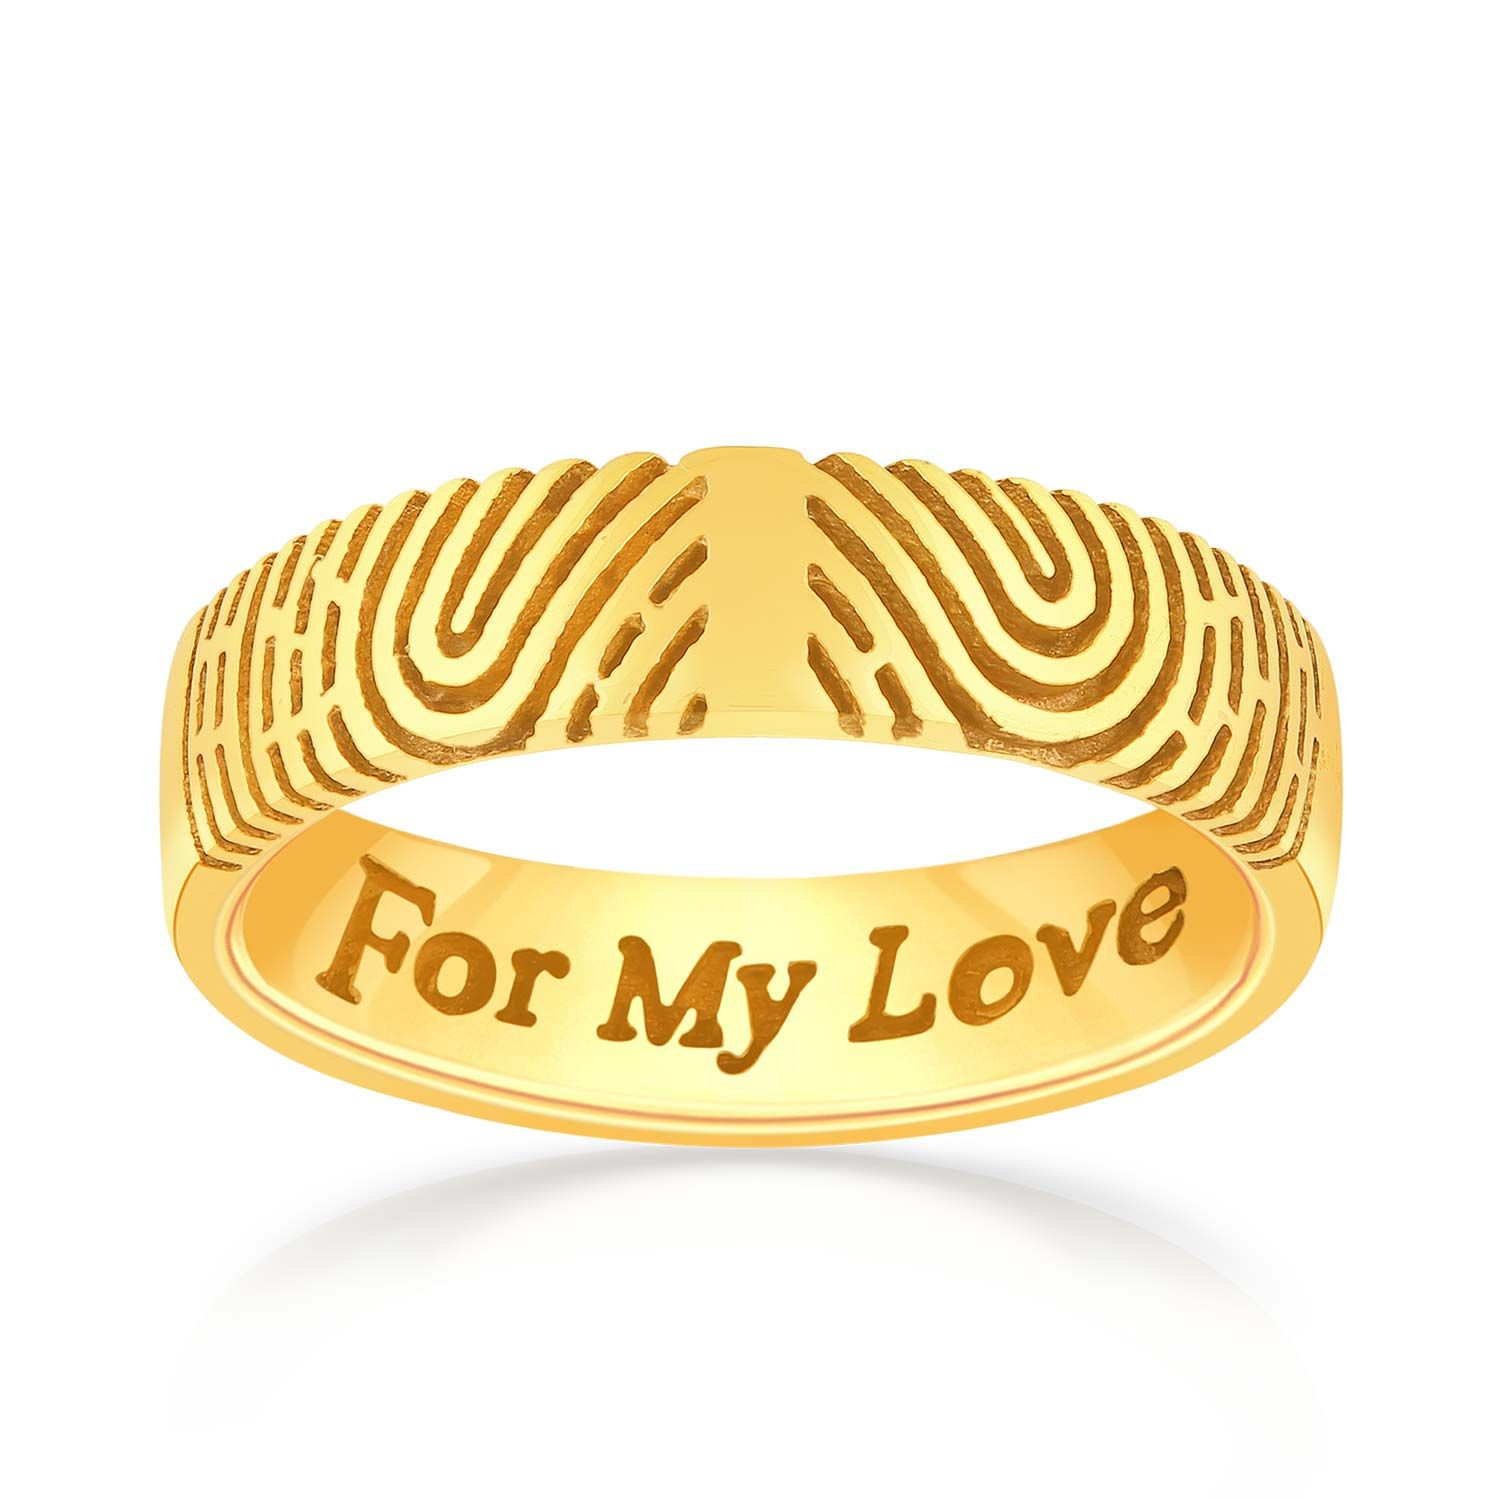 Malabar Gold Ring FROPLPR006G